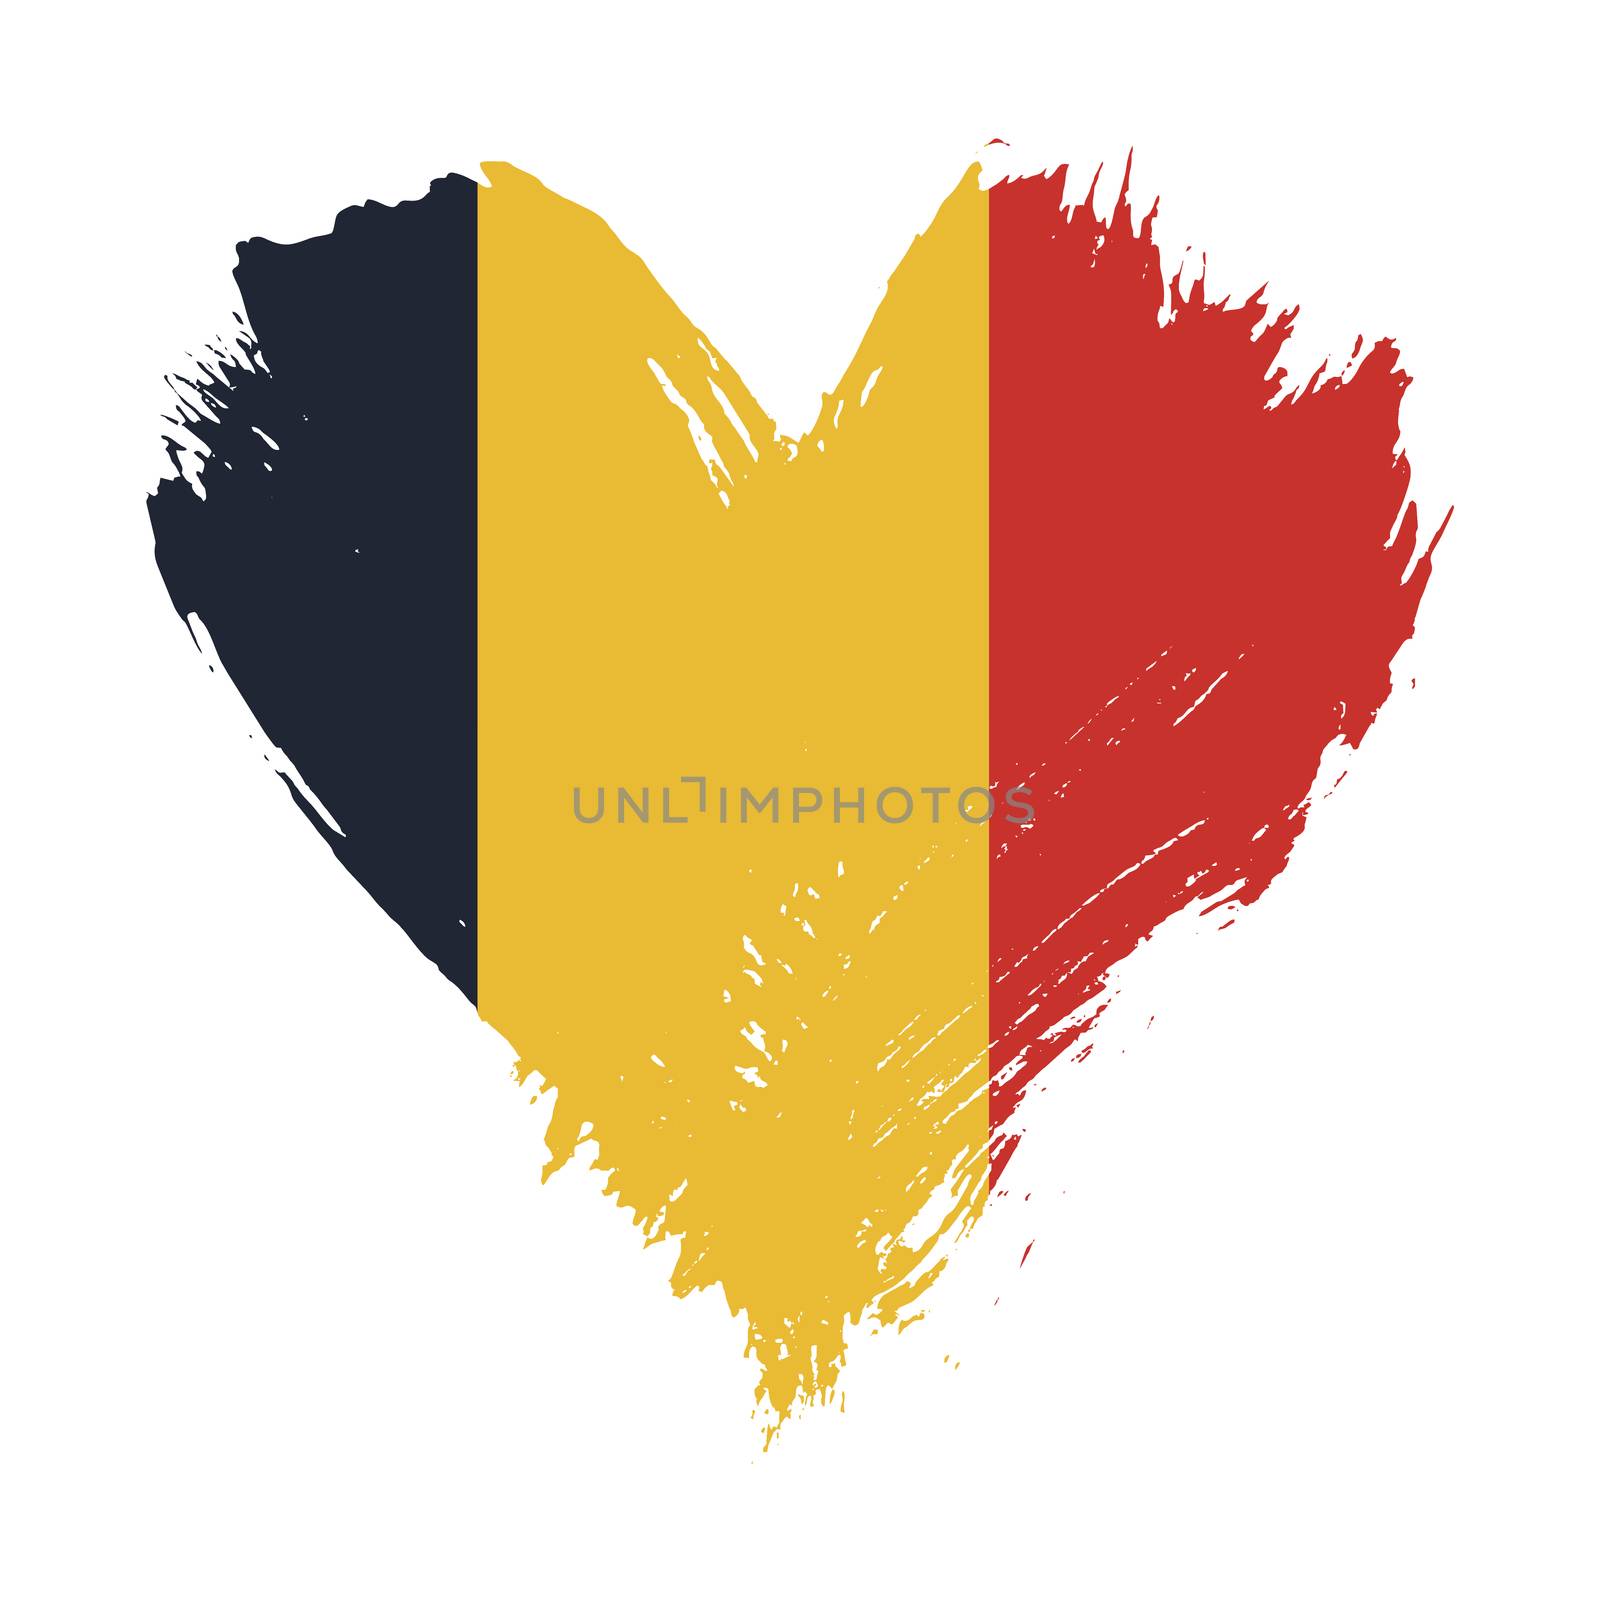 Grunge brushstroke painted illustration of heart shaped distressed Belgian flag isolated on white background